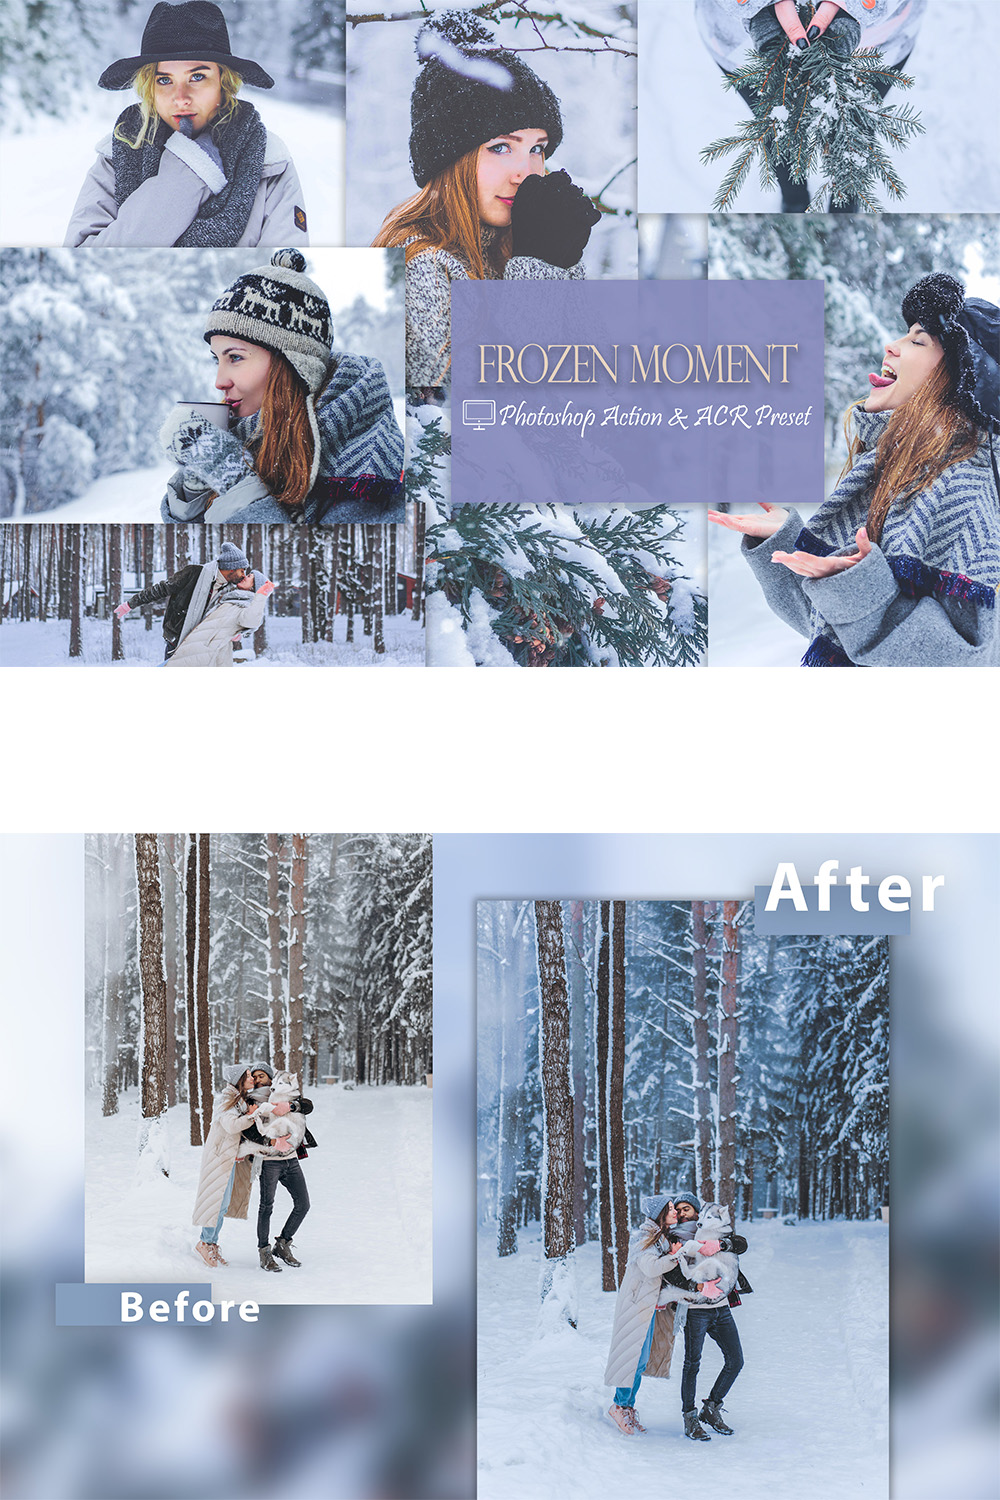 12 Photoshop Actions, Frozen Moment Ps Action, Winter ACR Preset, Saturation Filter, Lifestyle Theme For Instagram, Cold Blue, Professional Portrait pinterest preview image.